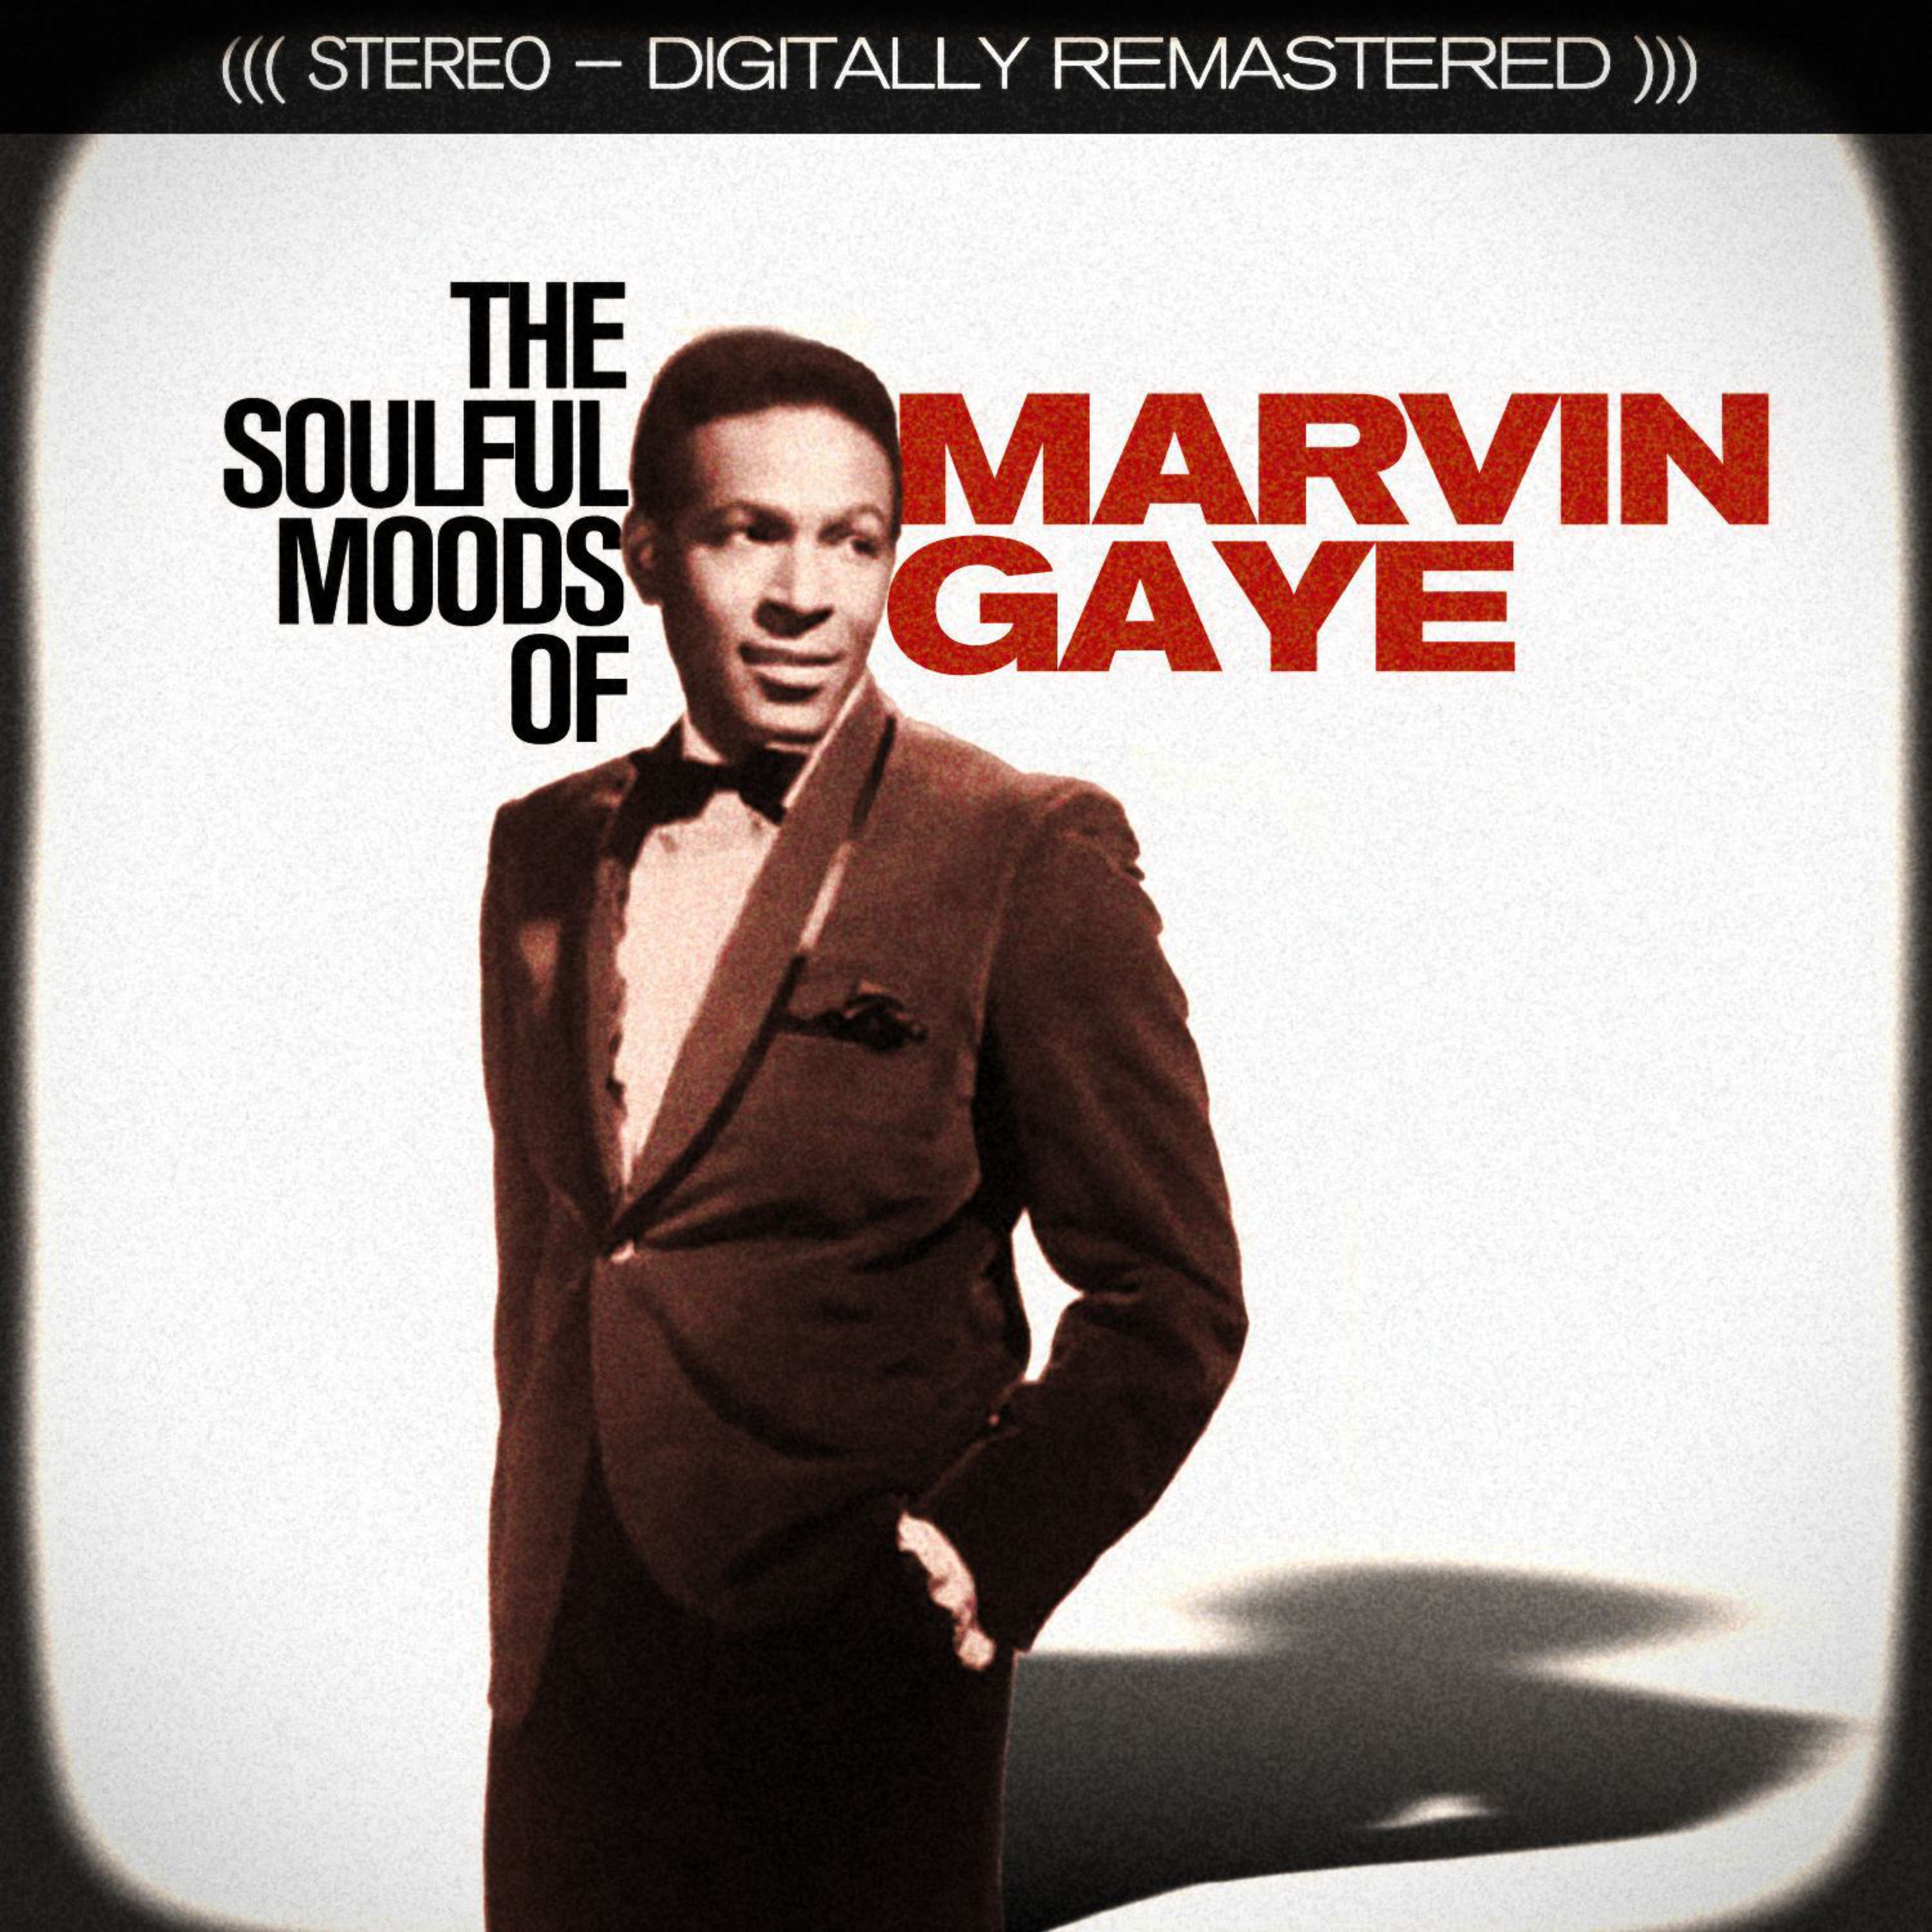 The Soulful Moods of Marvin Gaye (Original 1961 Album - Digitally Remastered)